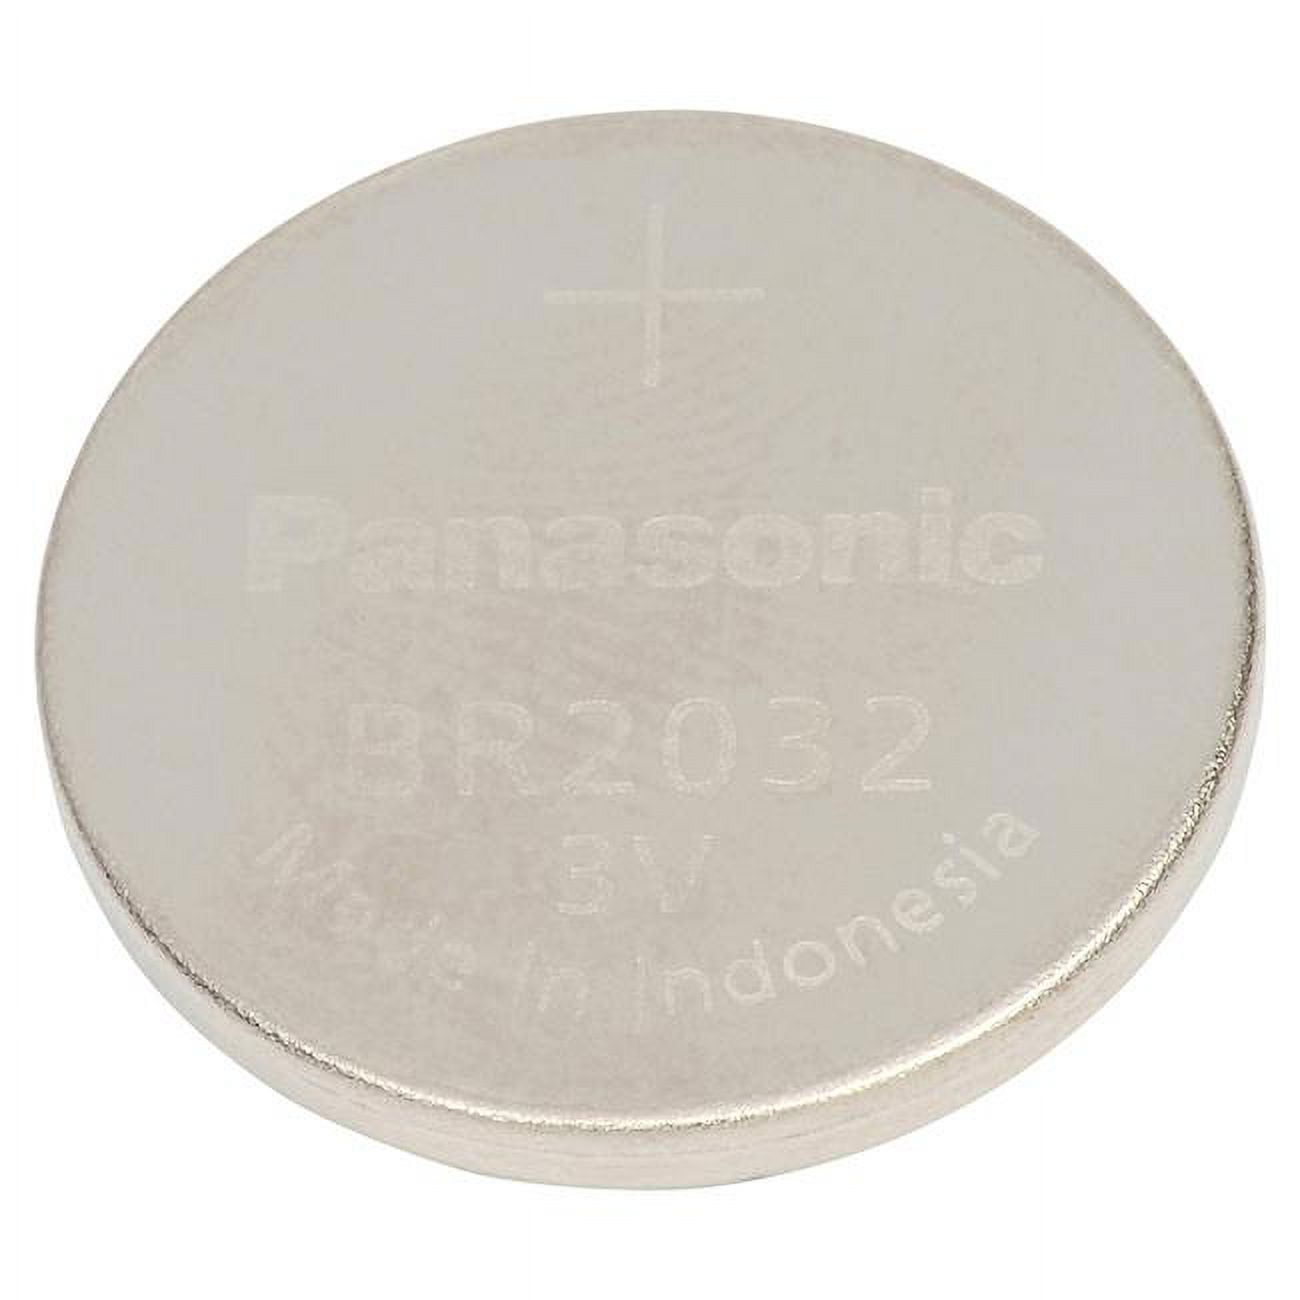 PANASONIC COMP-141